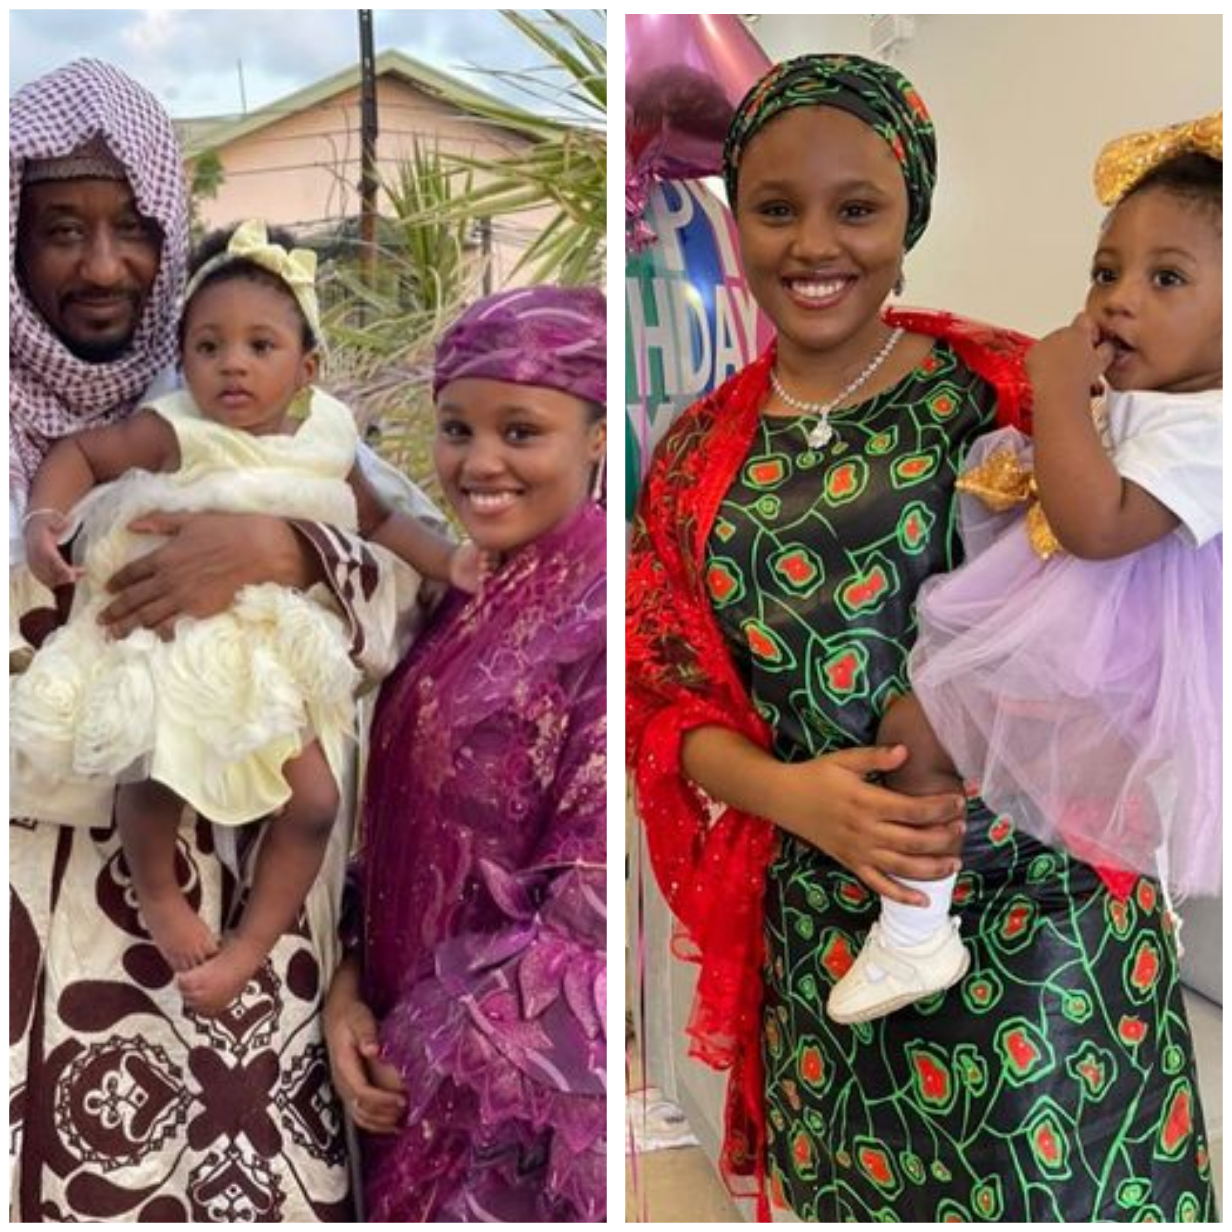 Former Emir of Kano, Sanusi Lamido Sanusi and 4th wife celebrate their daughter